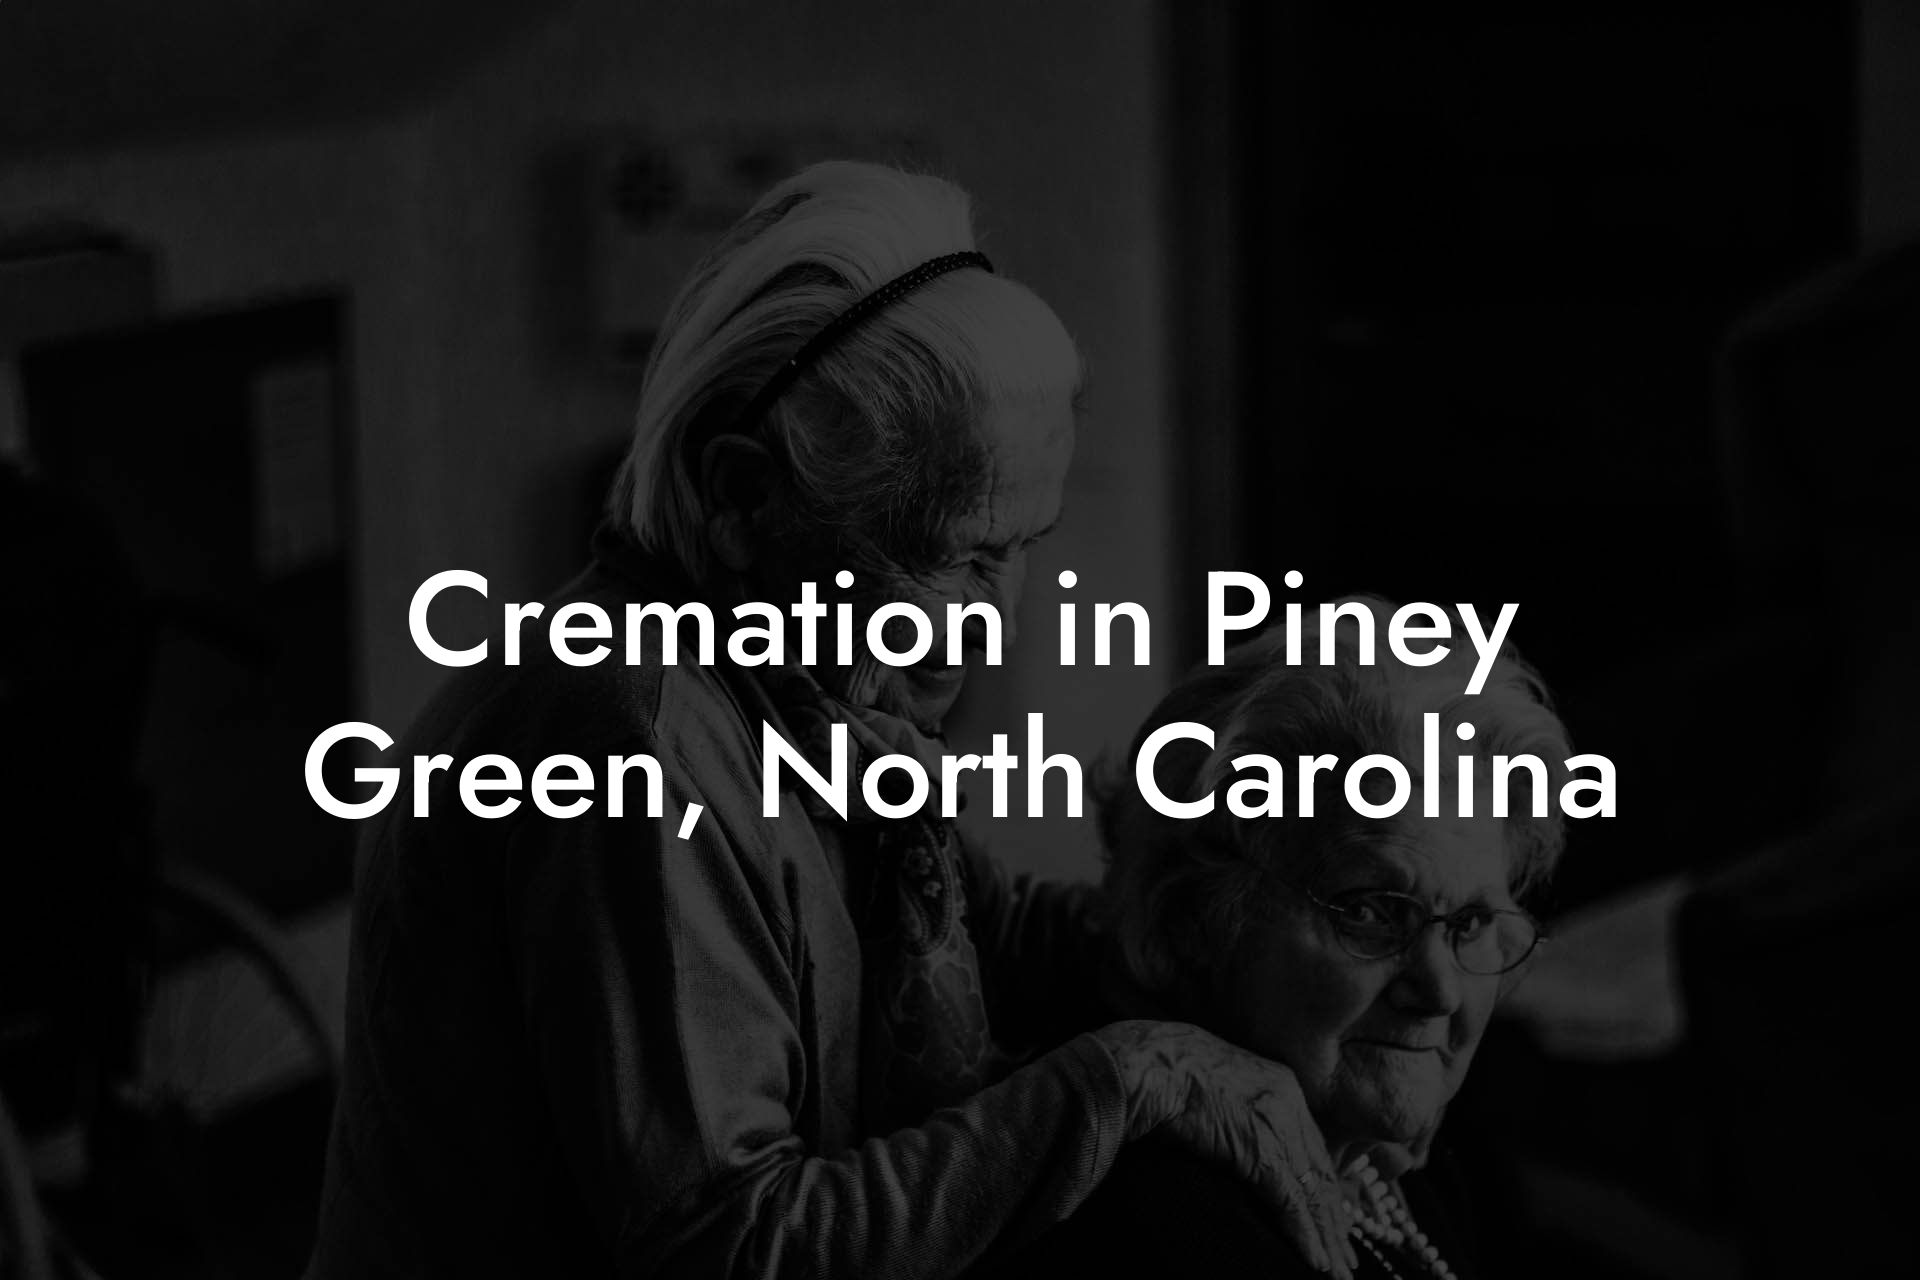 Cremation in Piney Green, North Carolina